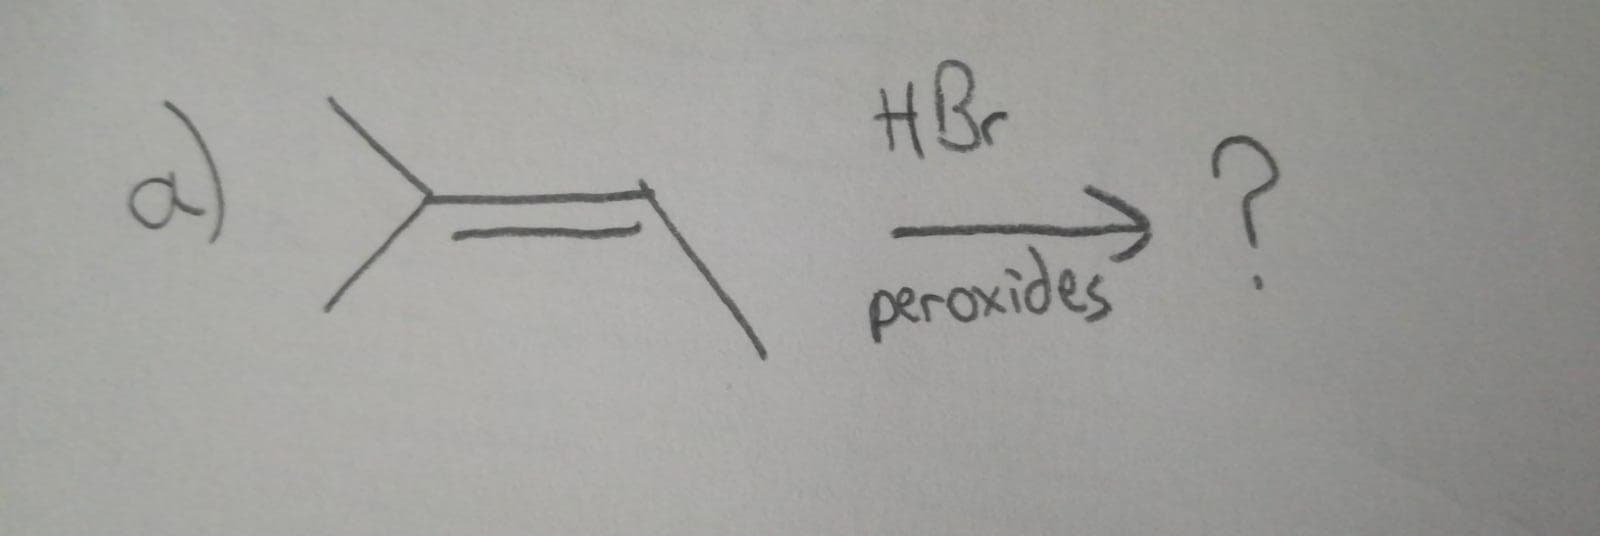 HBr
?
peroxides
